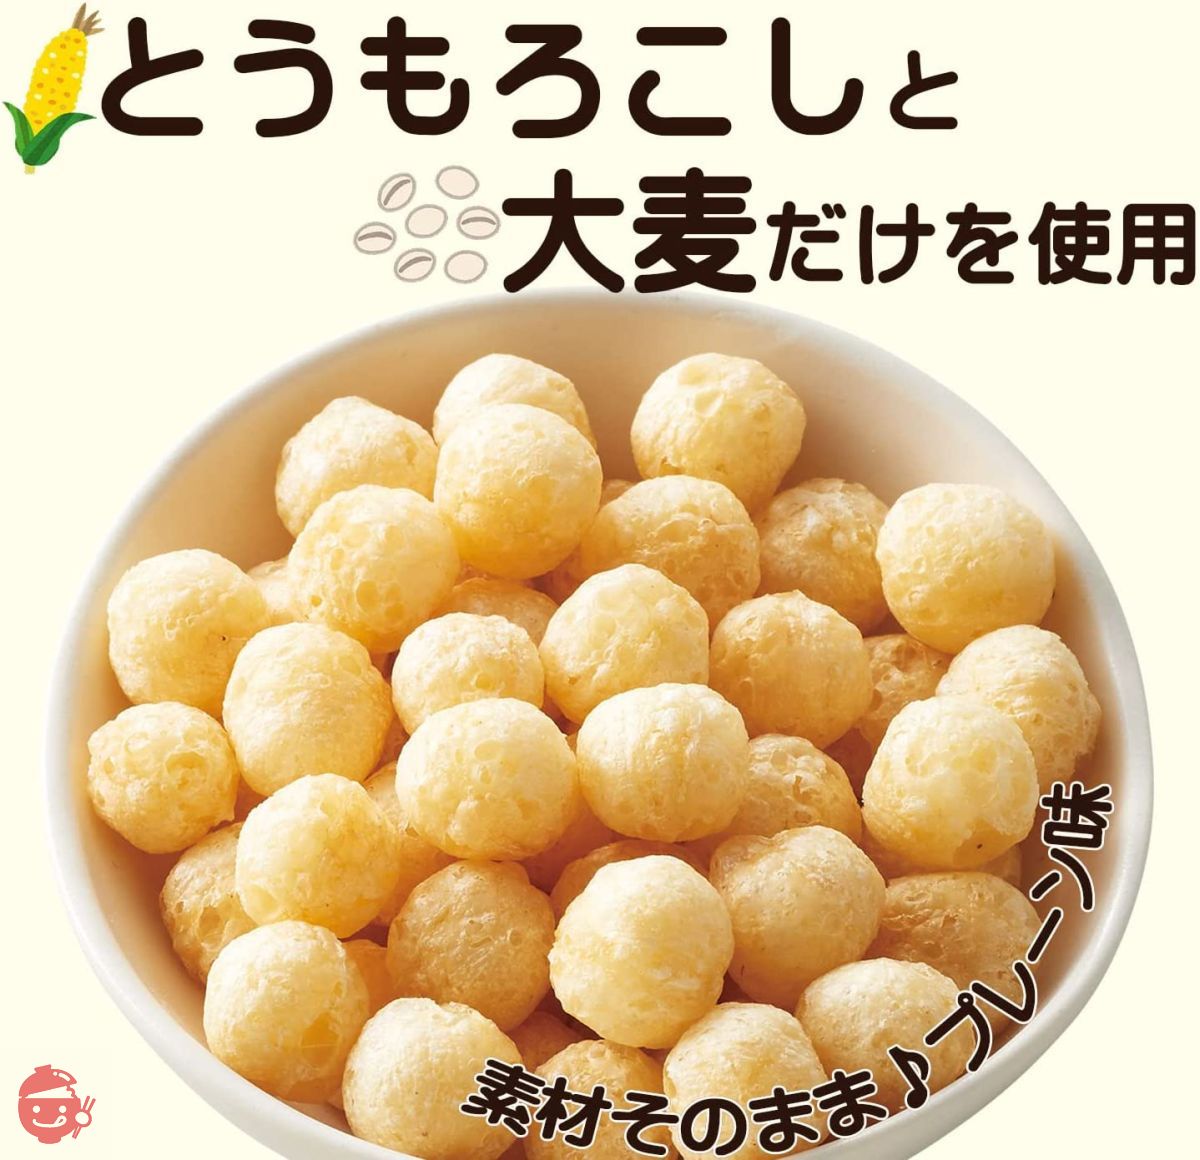 For baby food and gifts] Hakubaku baby snack 15g x 10 bags